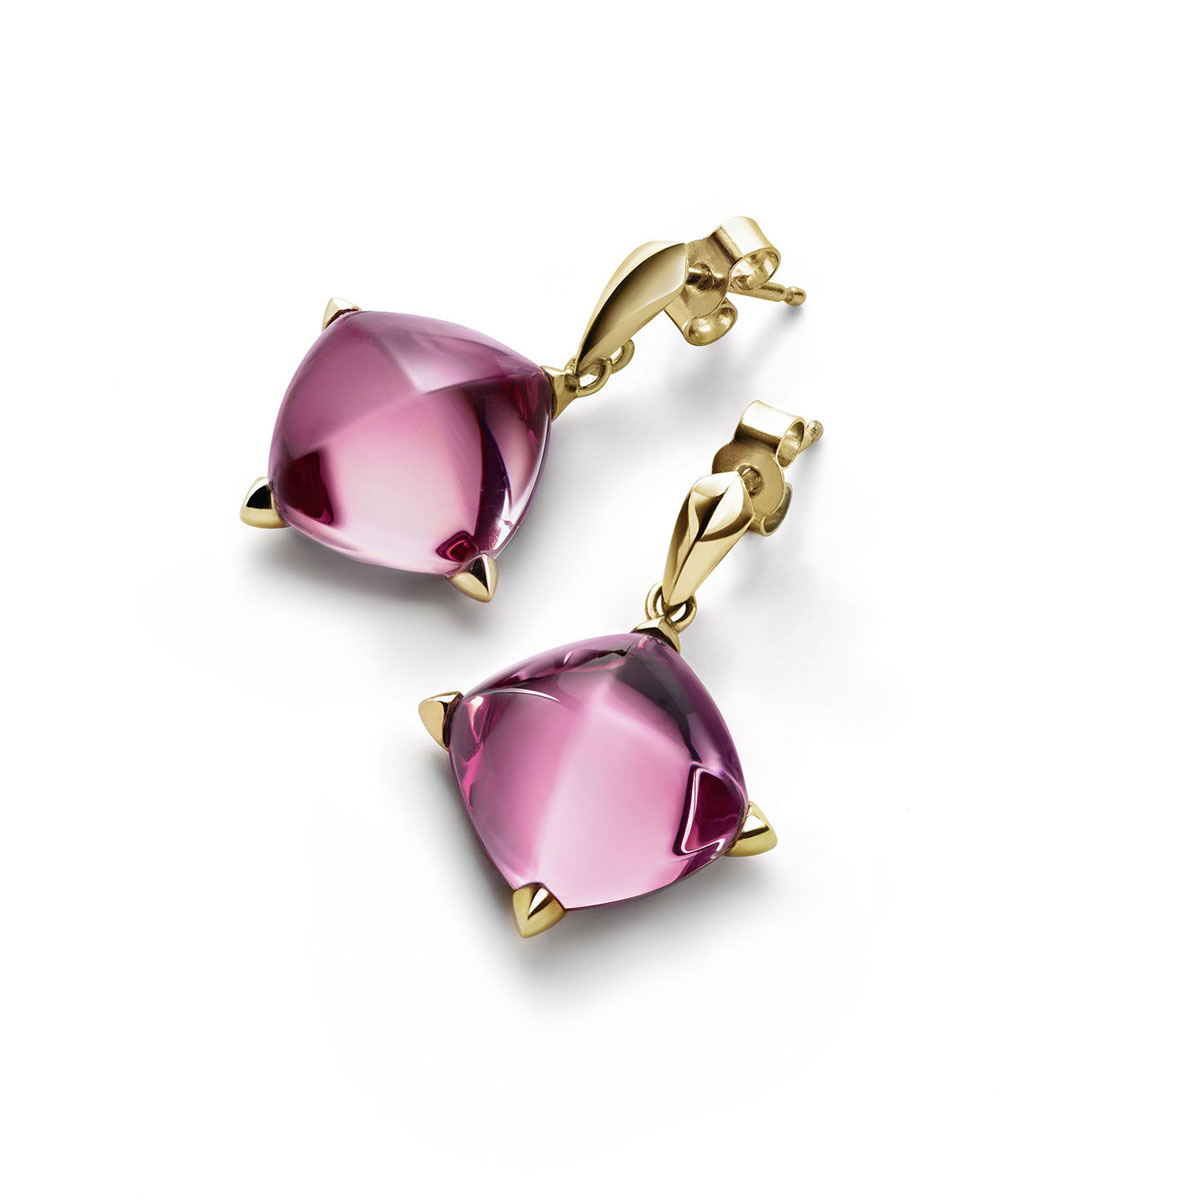 Baccarat Crystal Medicis Stem Earrings Vermeil Gold Pink